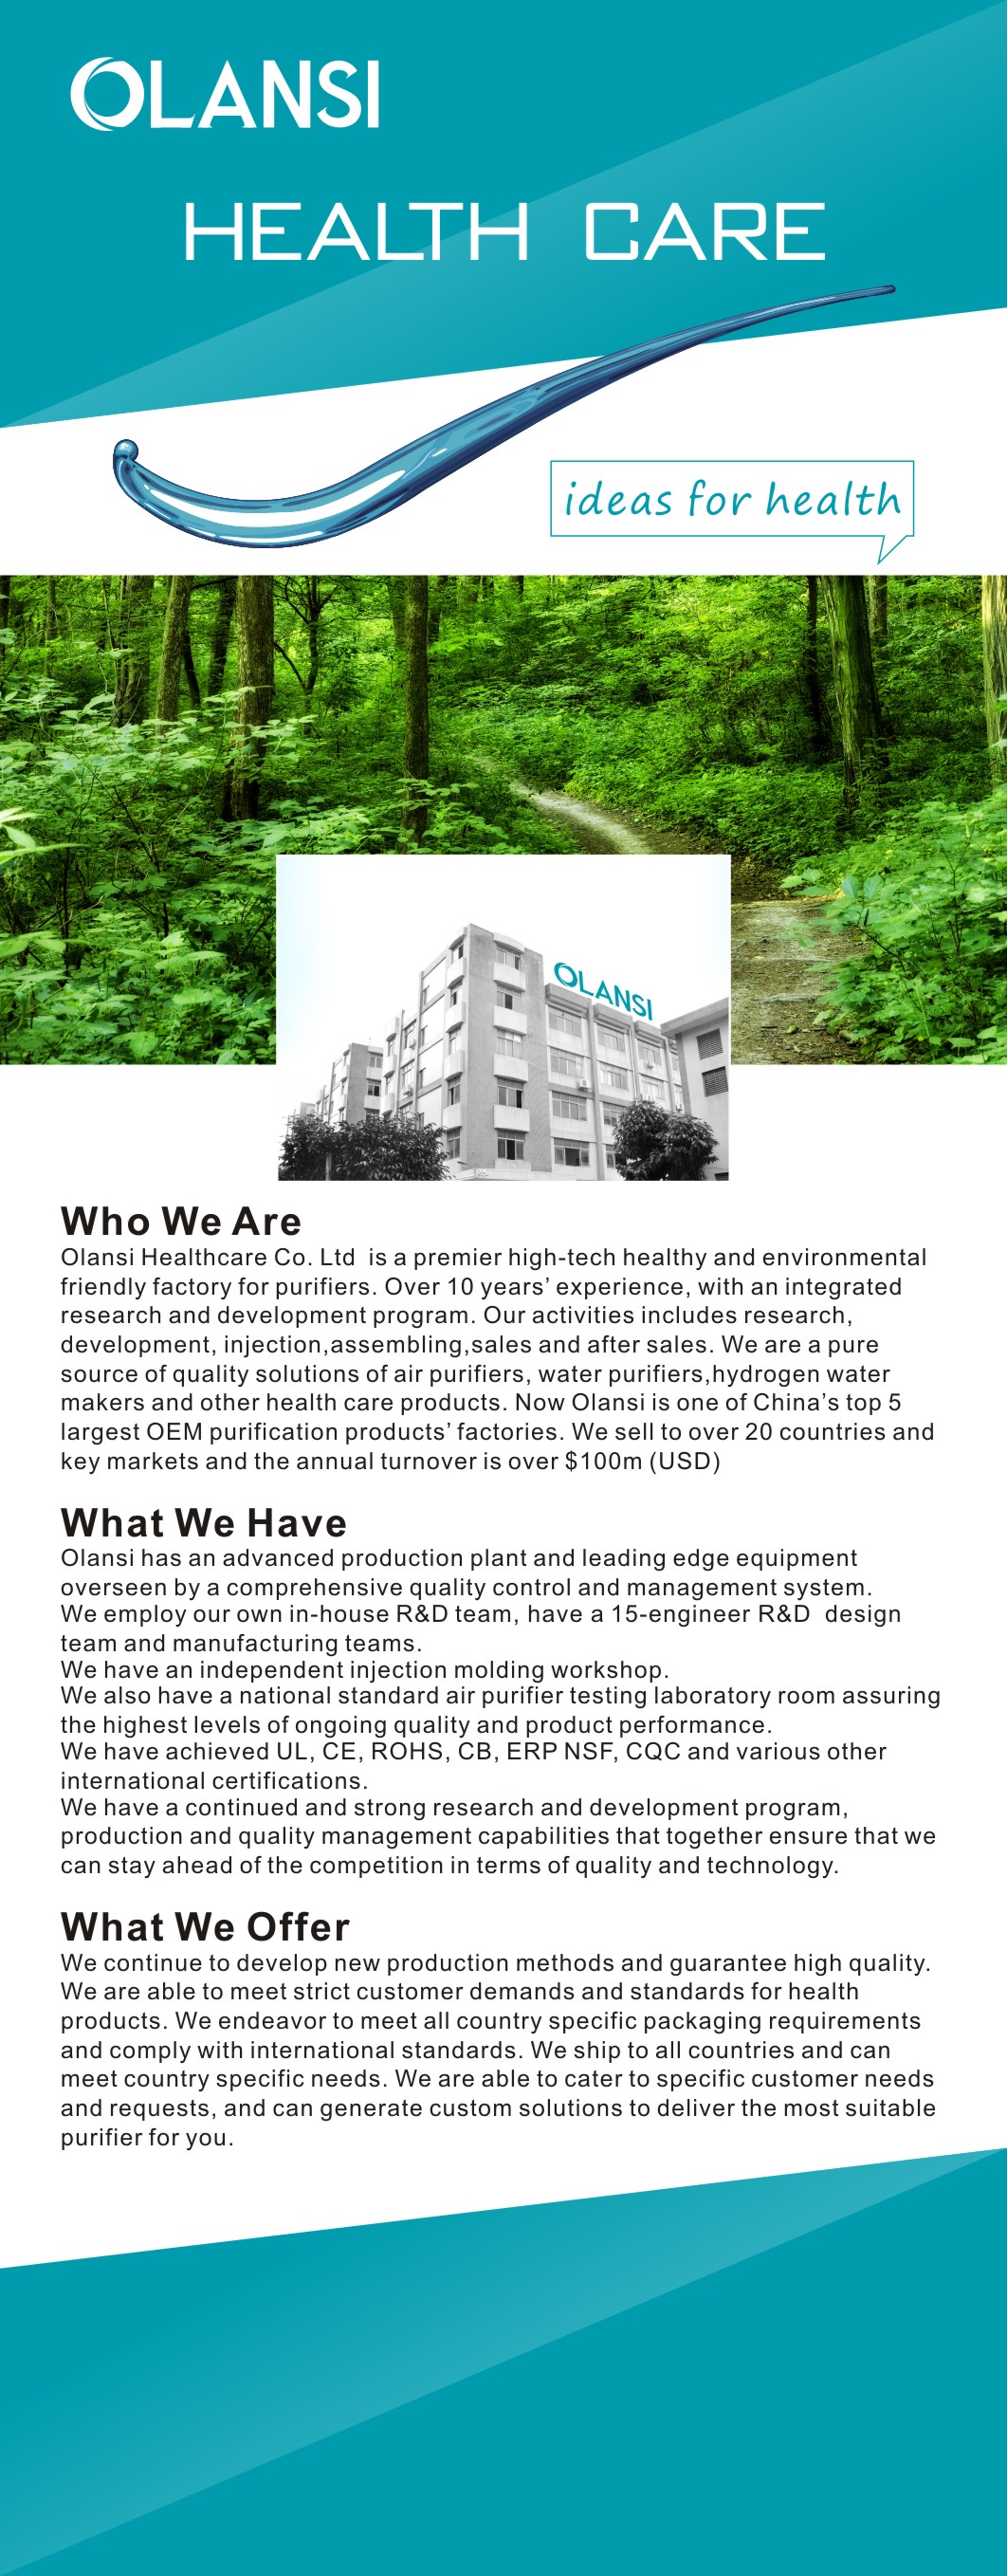 Guangzhou Olansi healthcare Co., Ltd